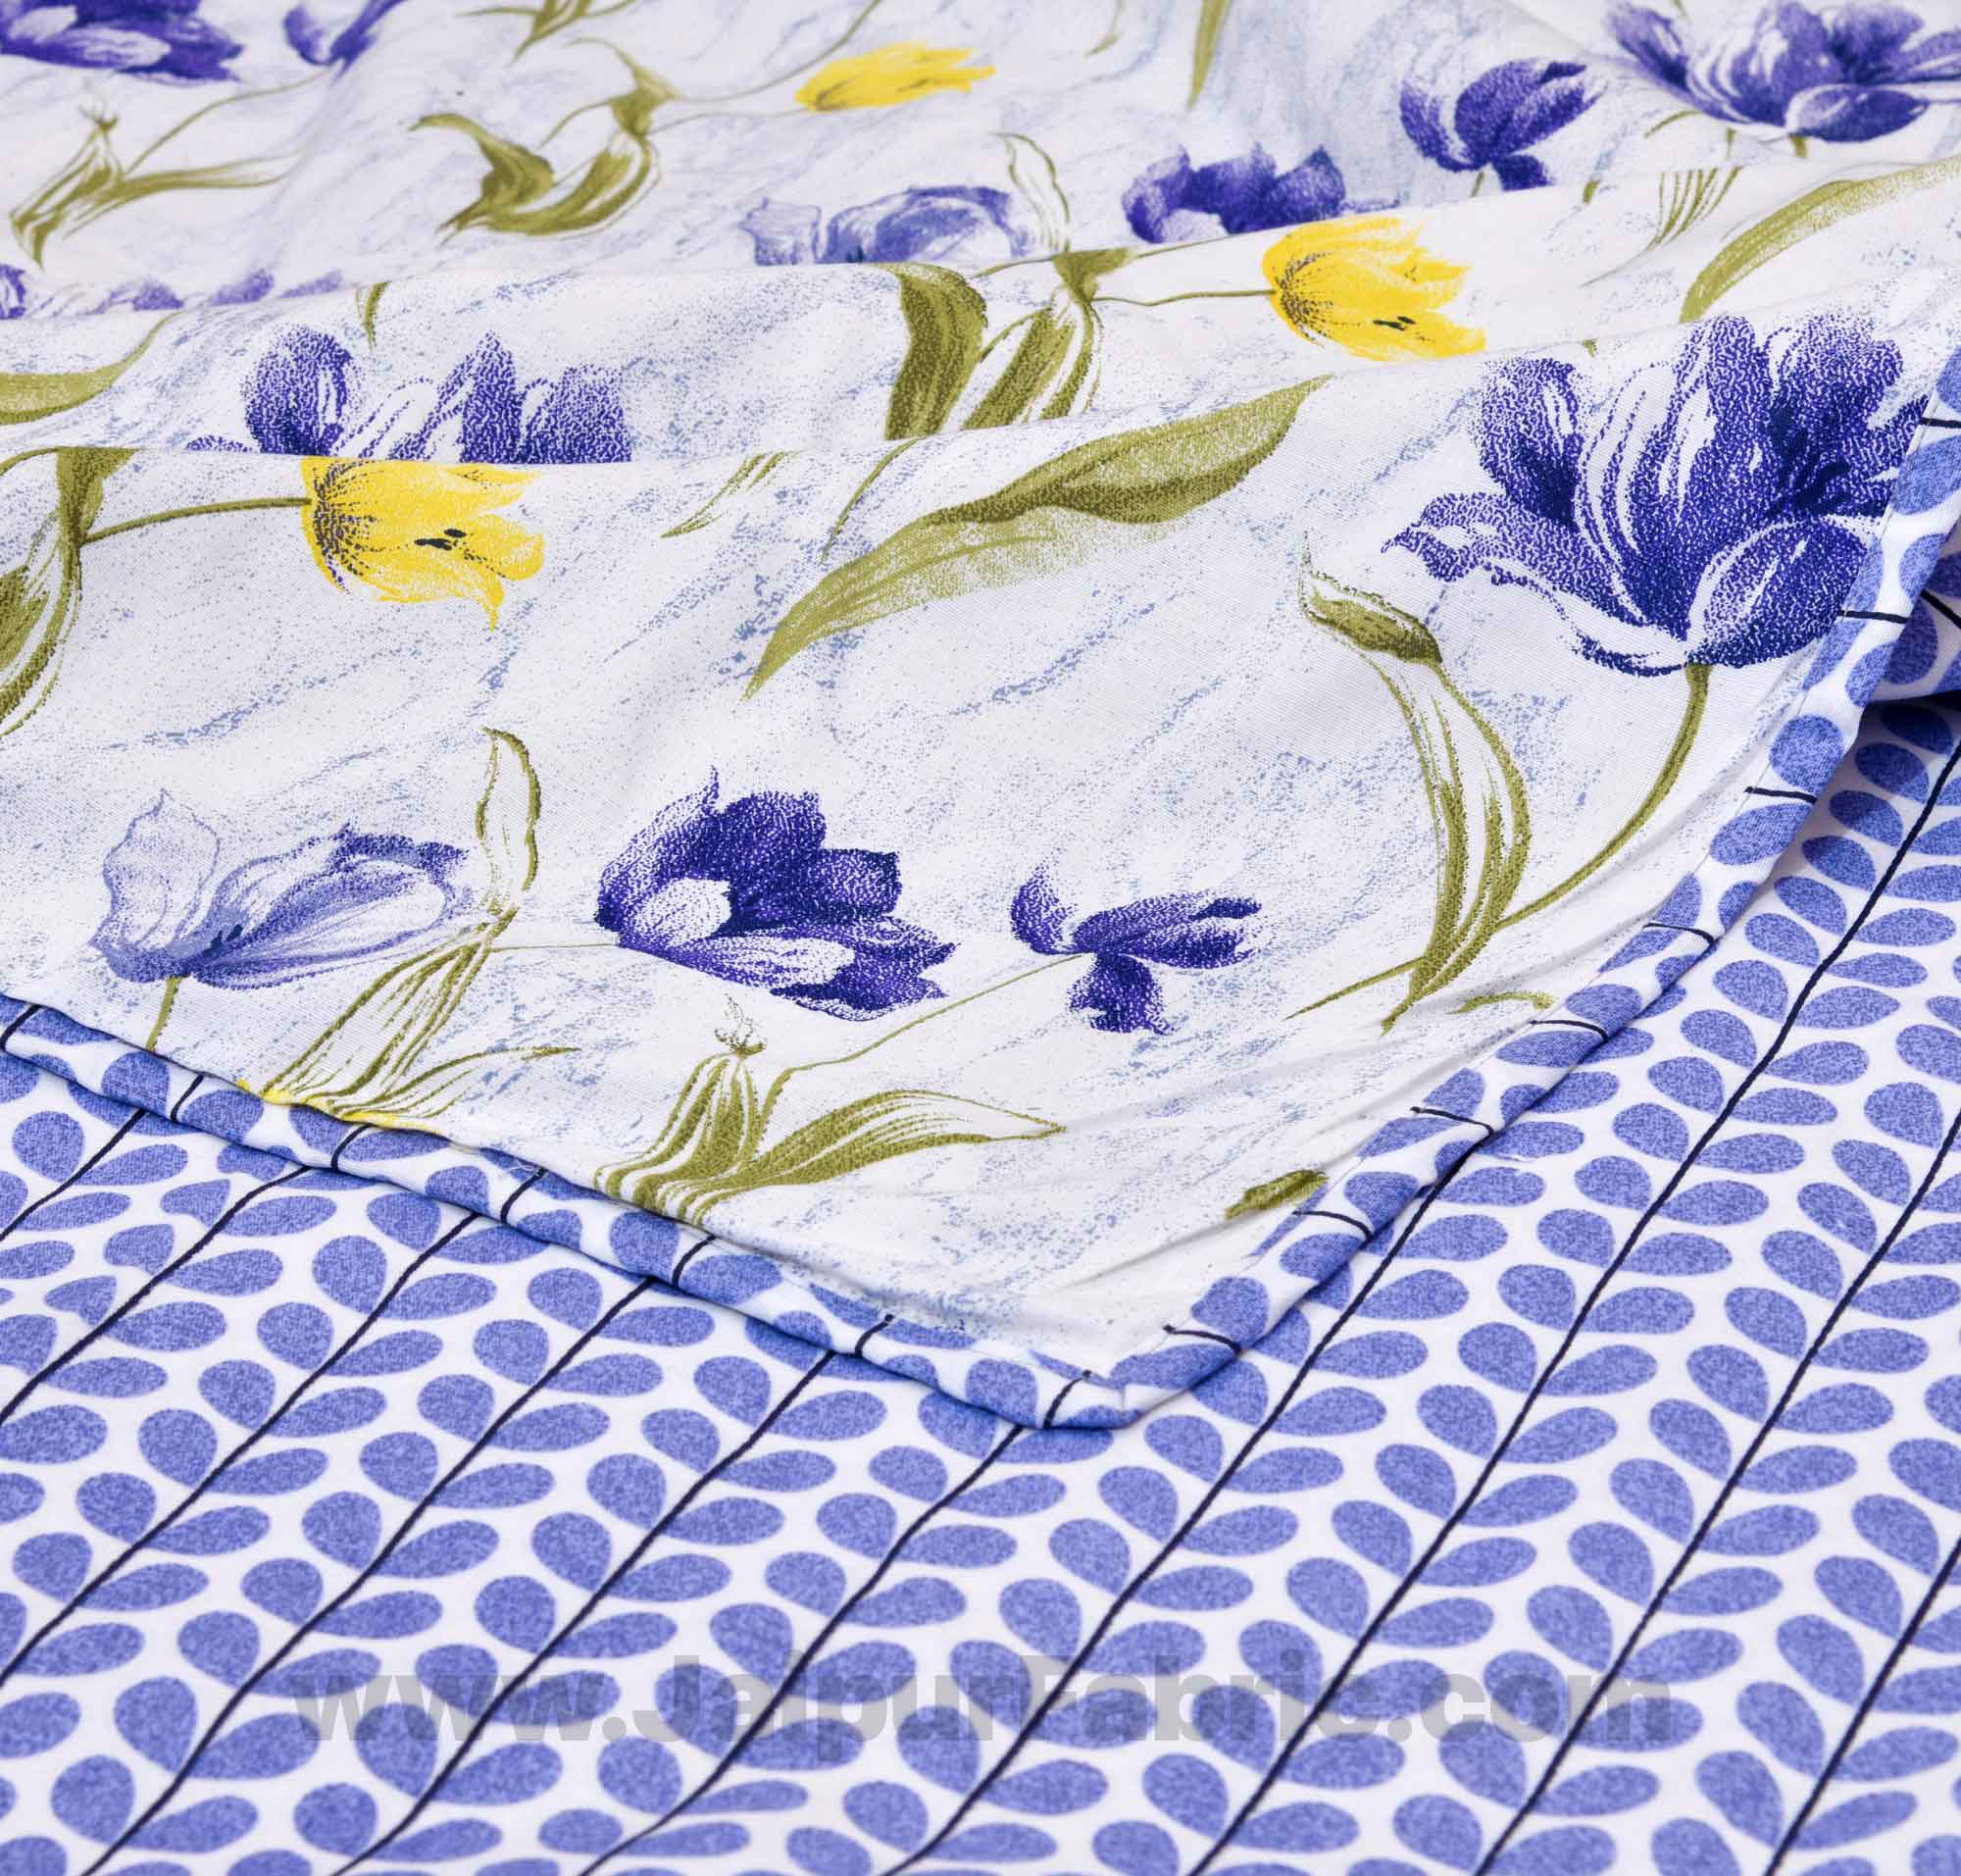 Lightweight Reversible Single Bed Dohar Blue Flower Skin Friendly Pure Cotton MulMul Blanket / AC Comforter / Summer Quilt